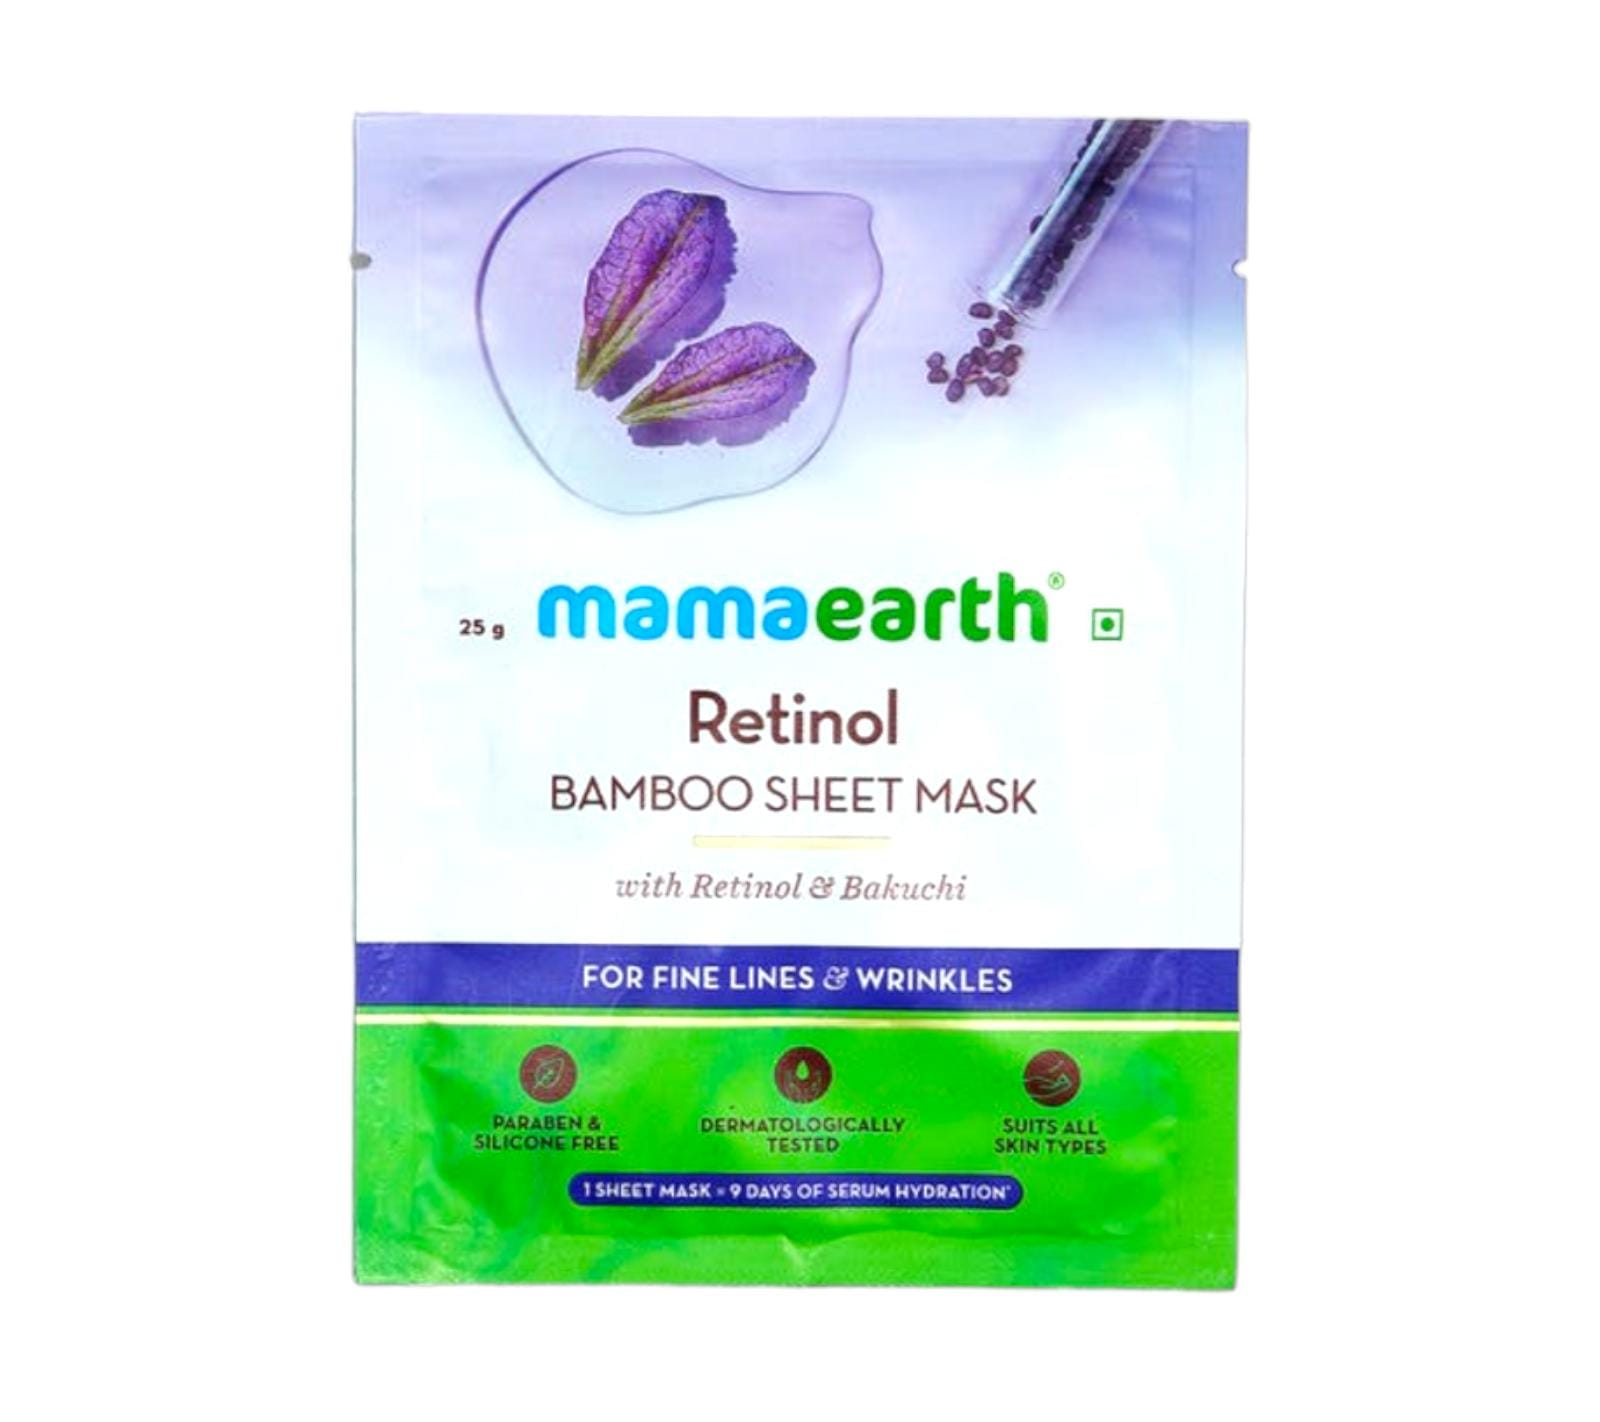 Mama earth Retinol Bamboo Mask sheet